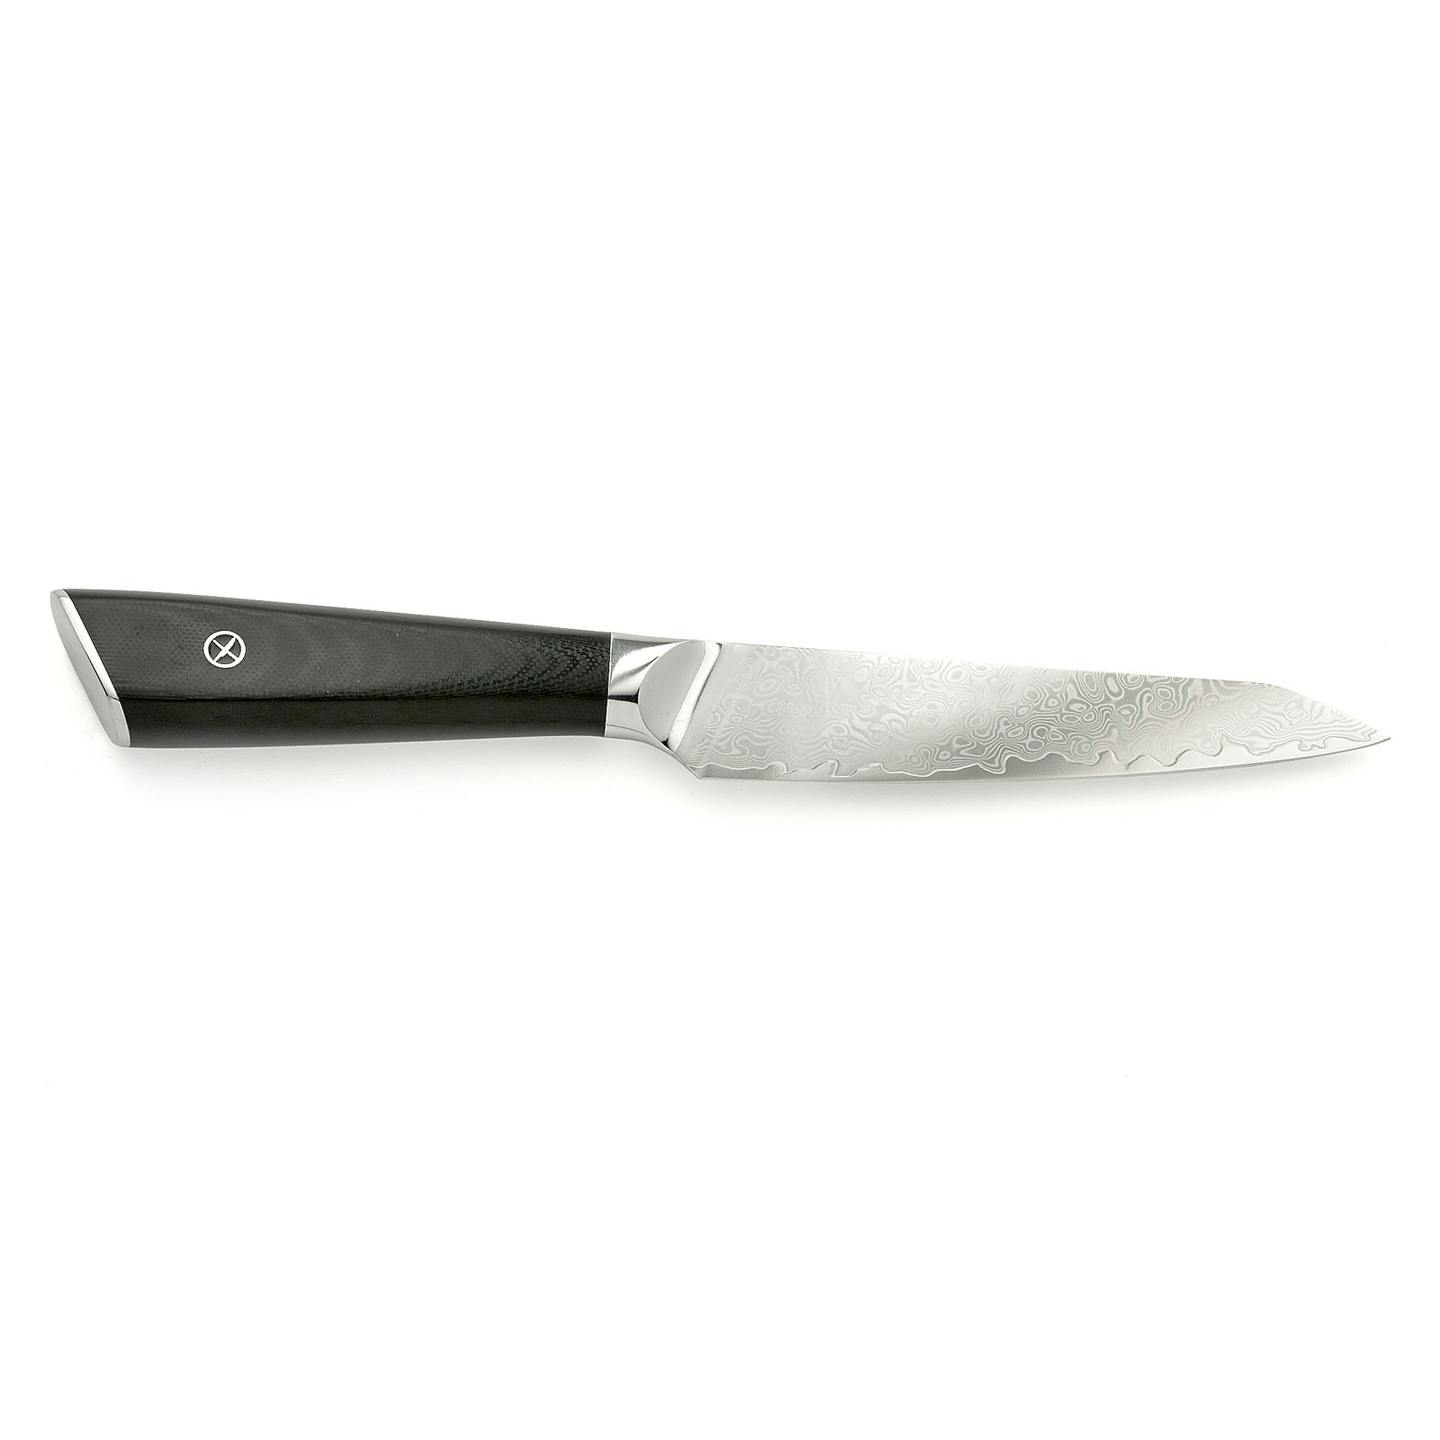 Mercer Culinary M13790 Damascus 5" Utility Knife, G10 Handle